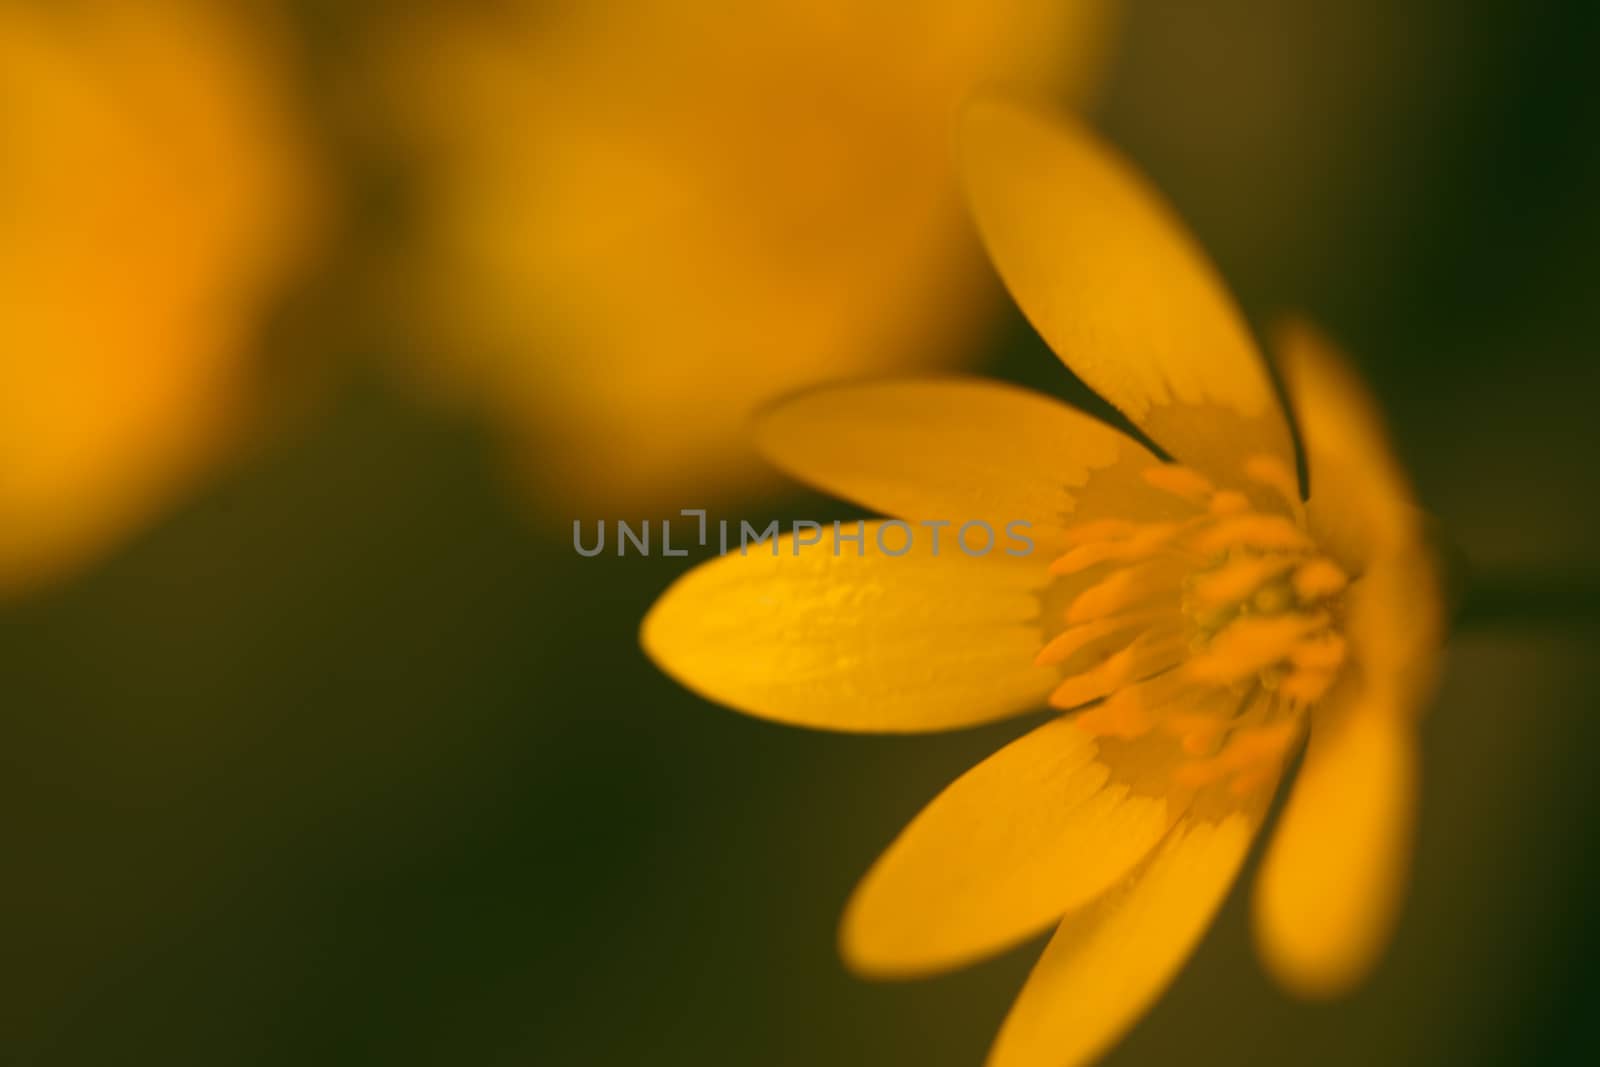 Abstract yellow flower macro shot